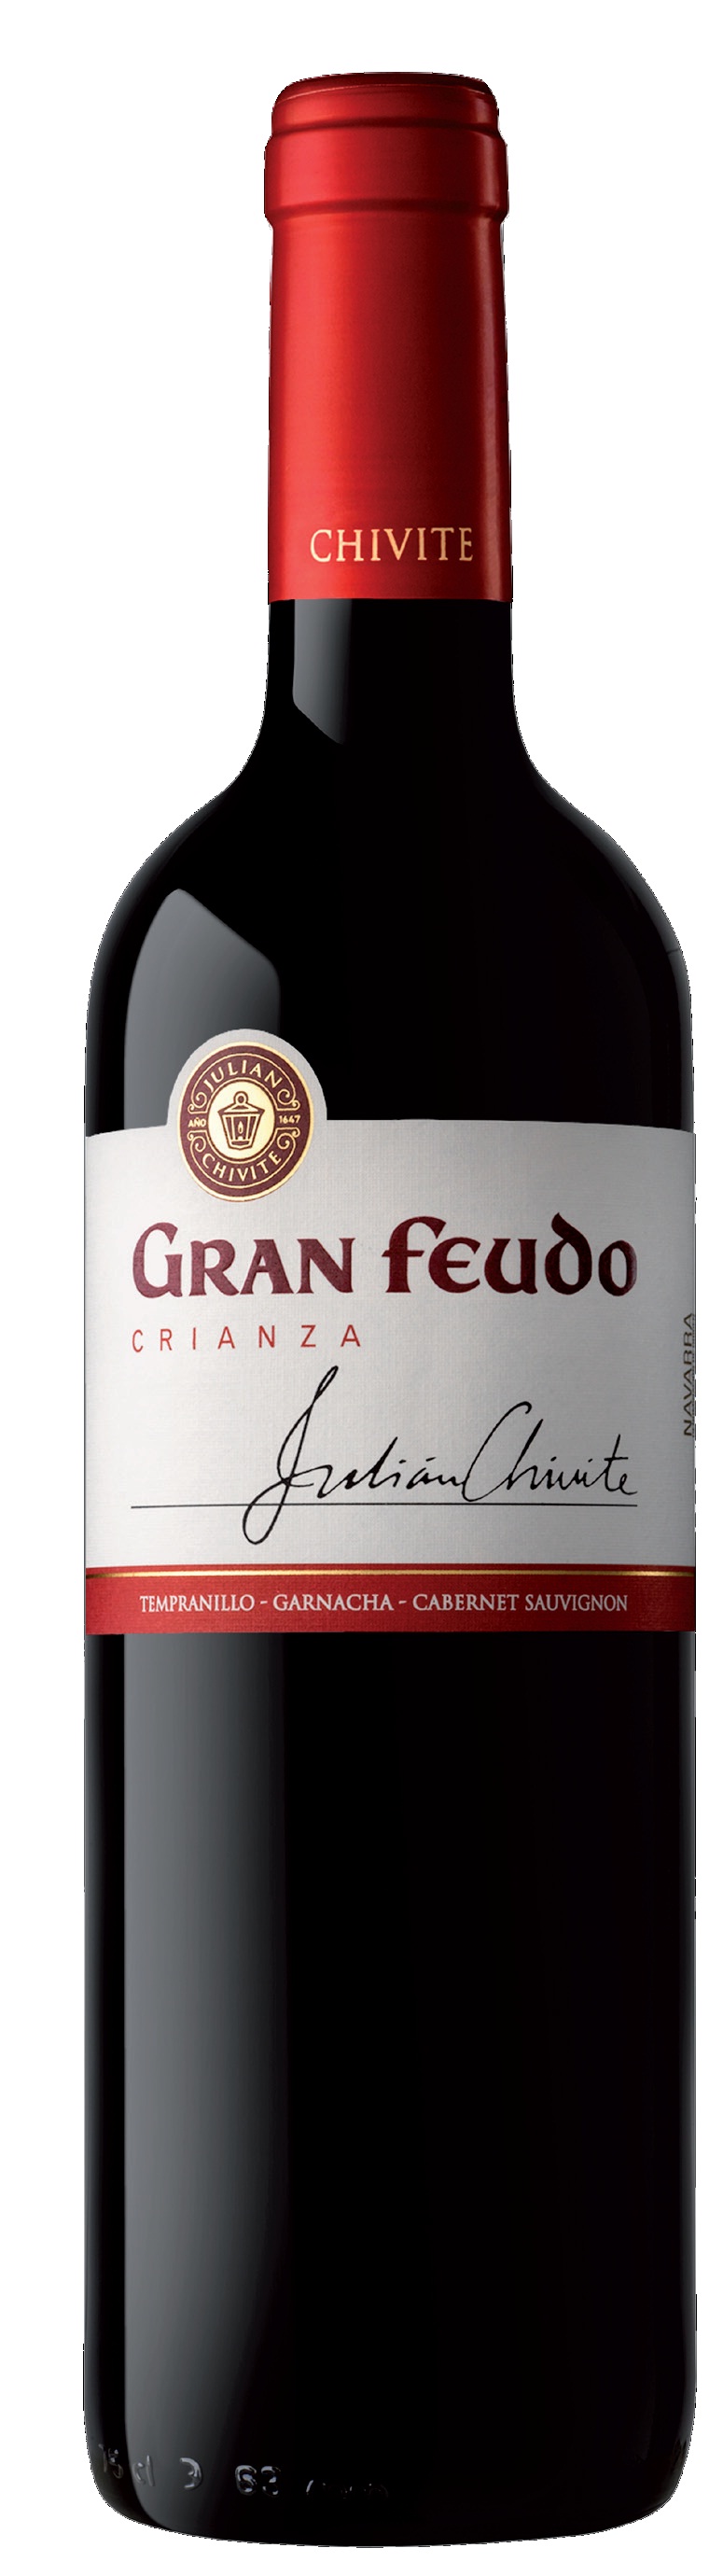 Image of Wine bottle Gran Feudo Crianza